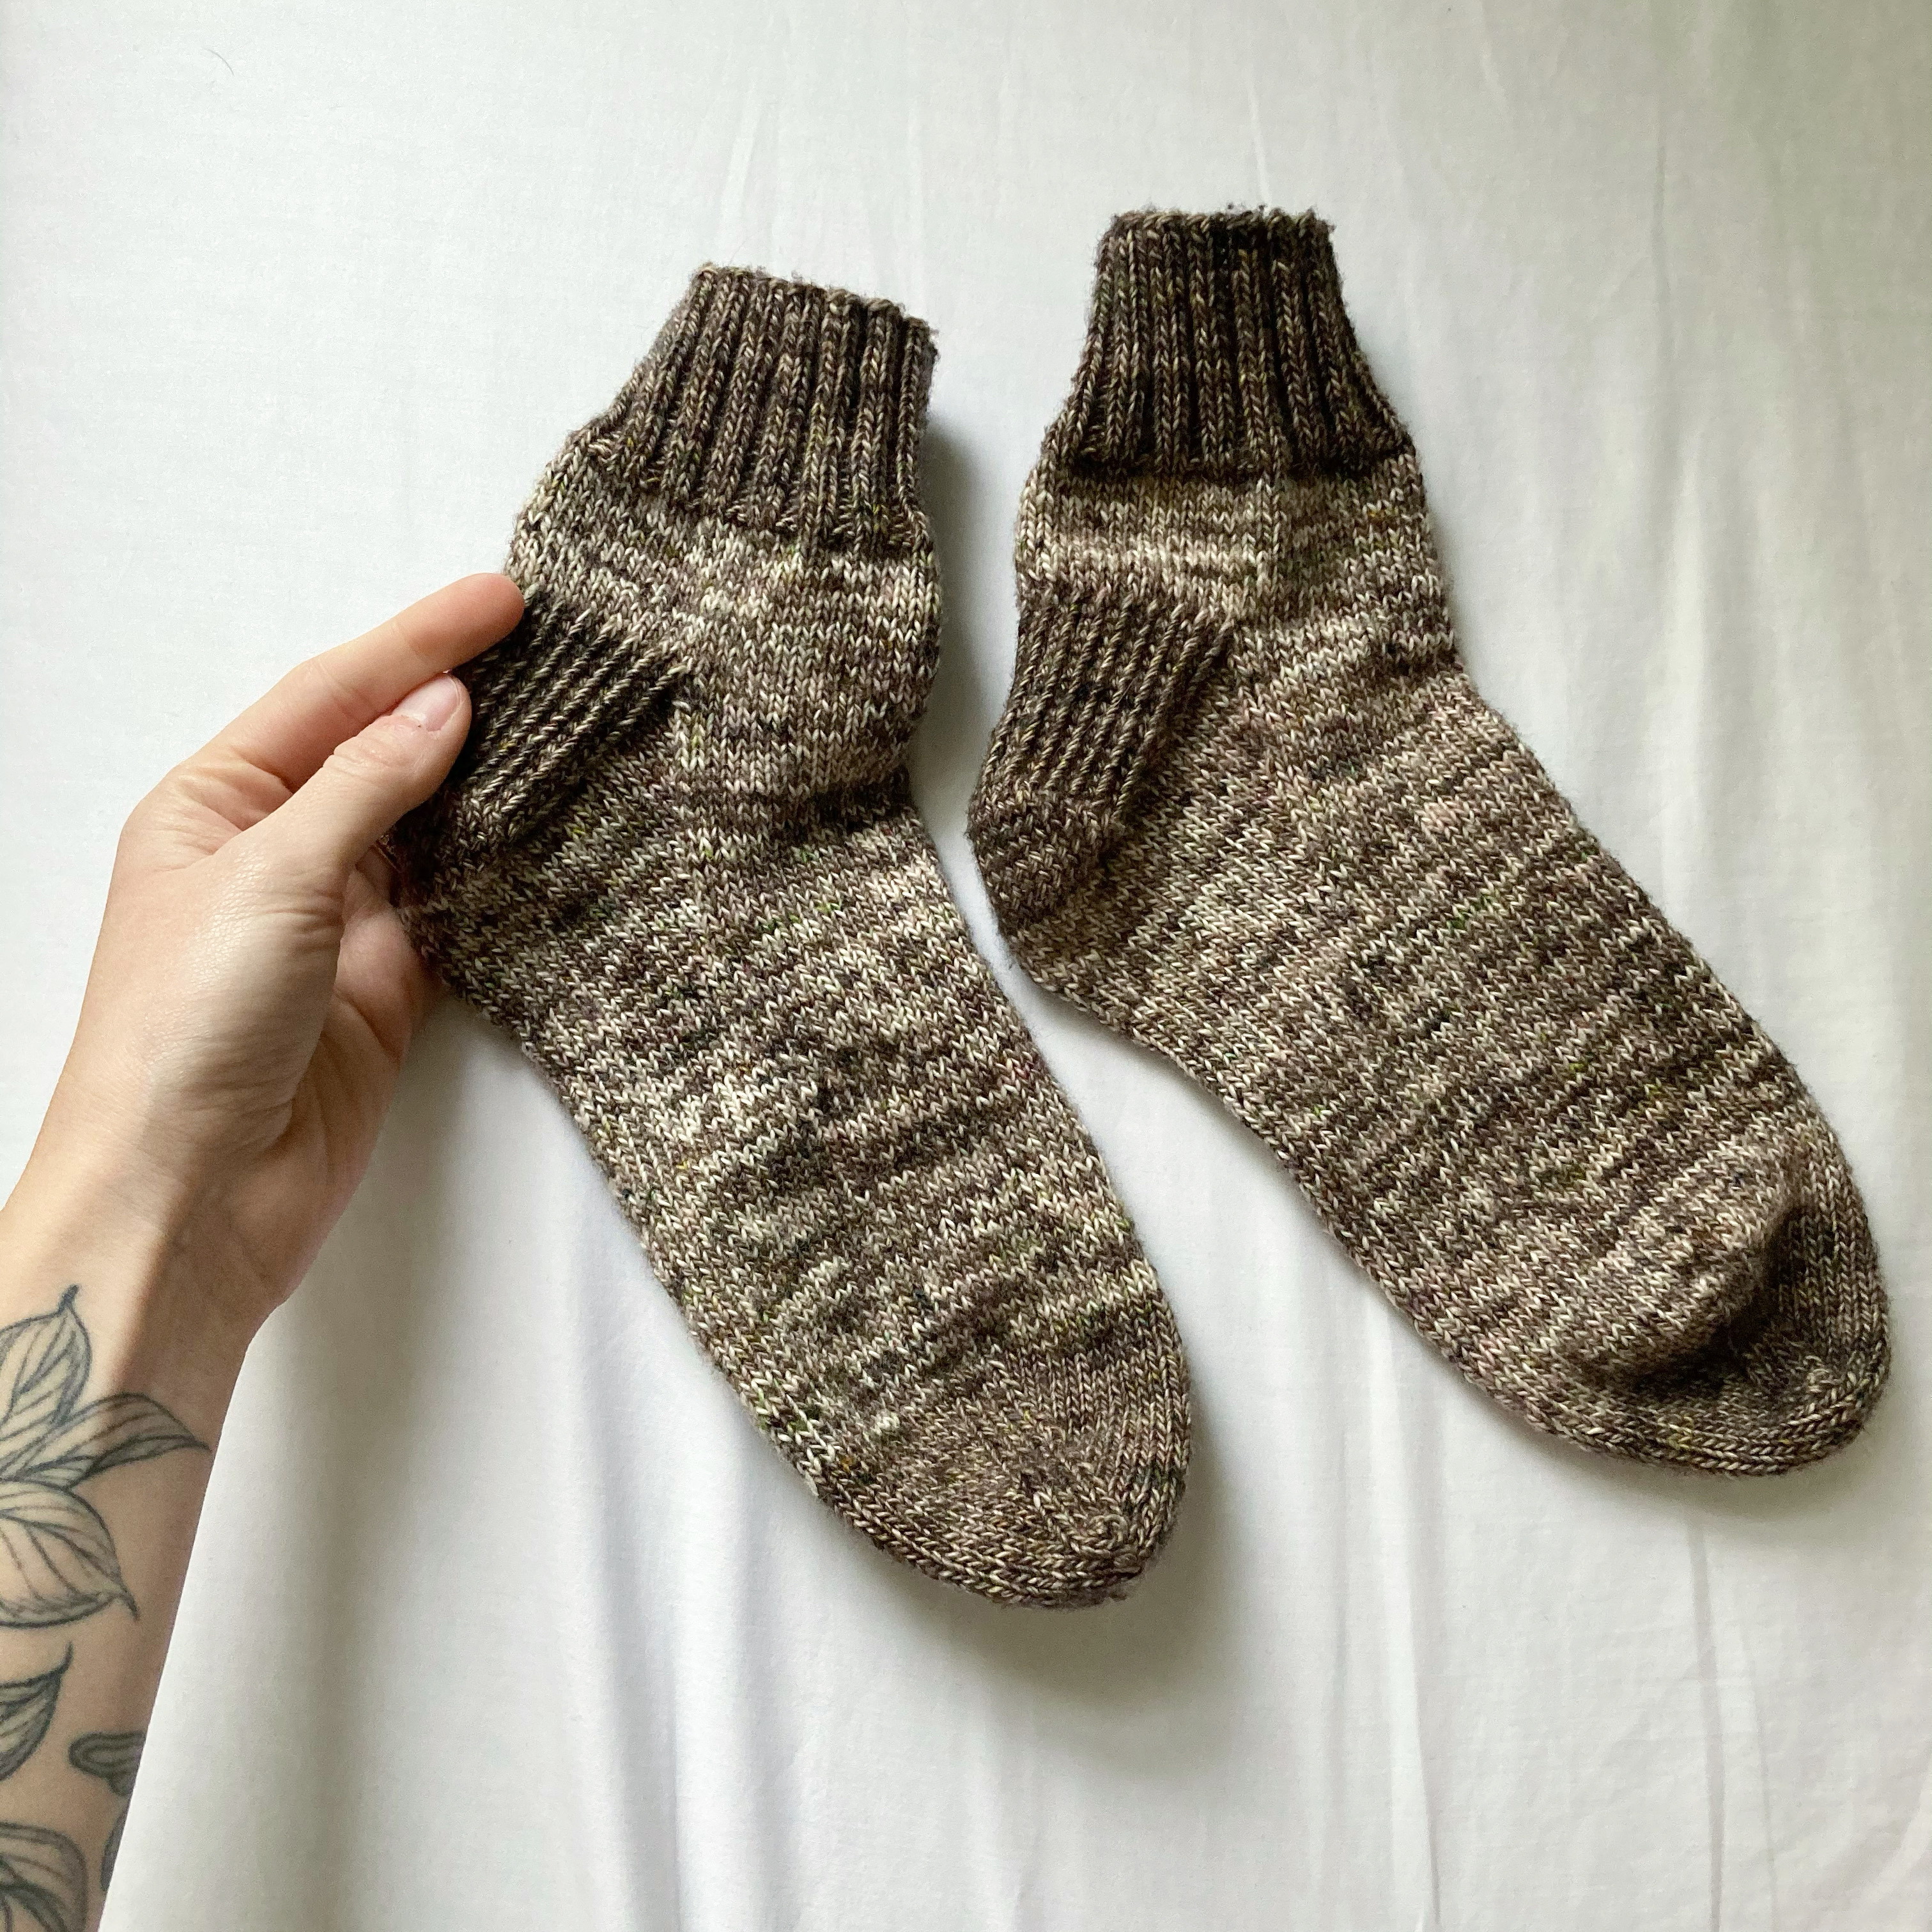 brown knitted socks with dark contrasting toe/heel